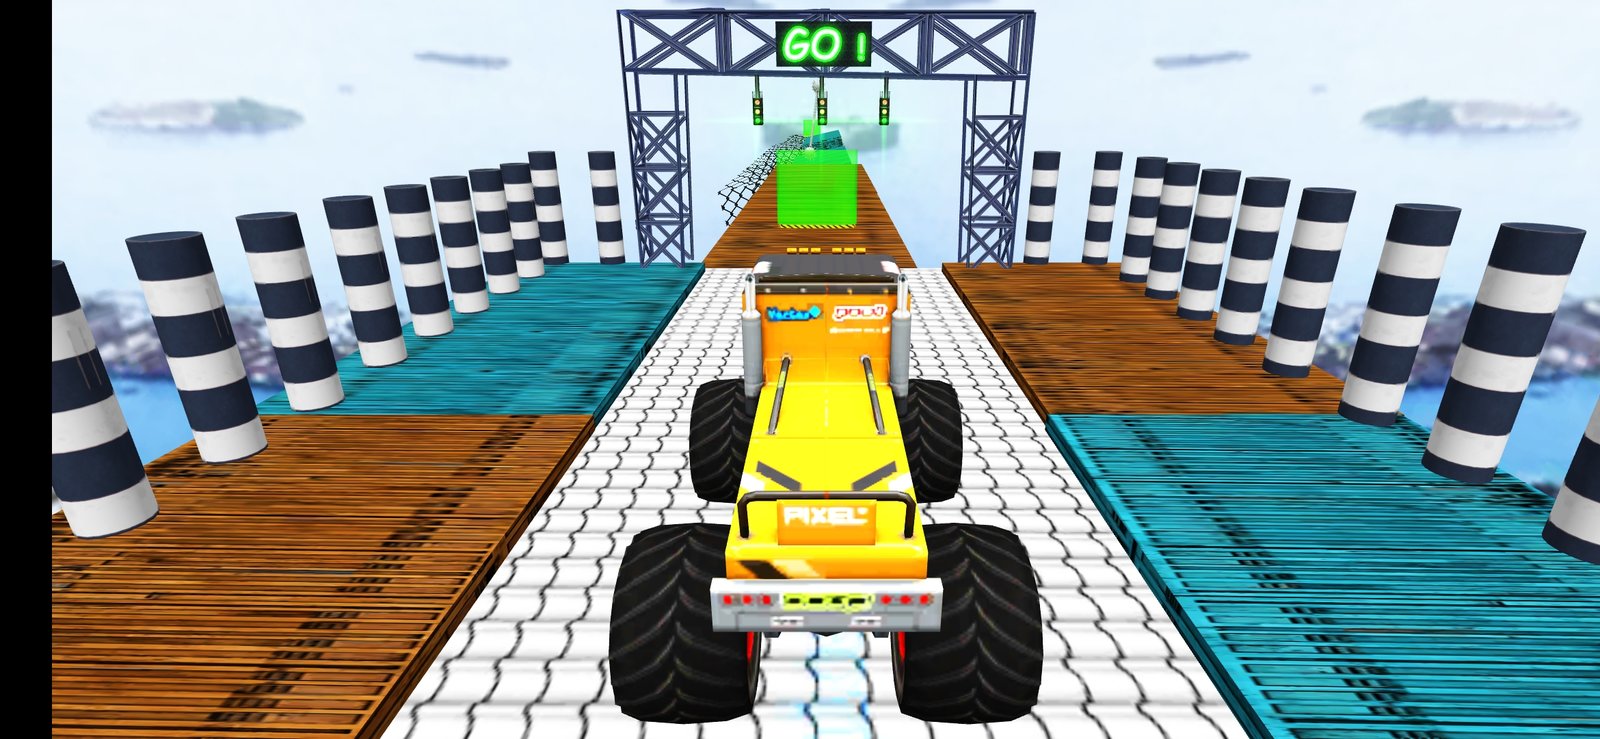 Monster Truck Racing Car Games v1.17 MOD APK 